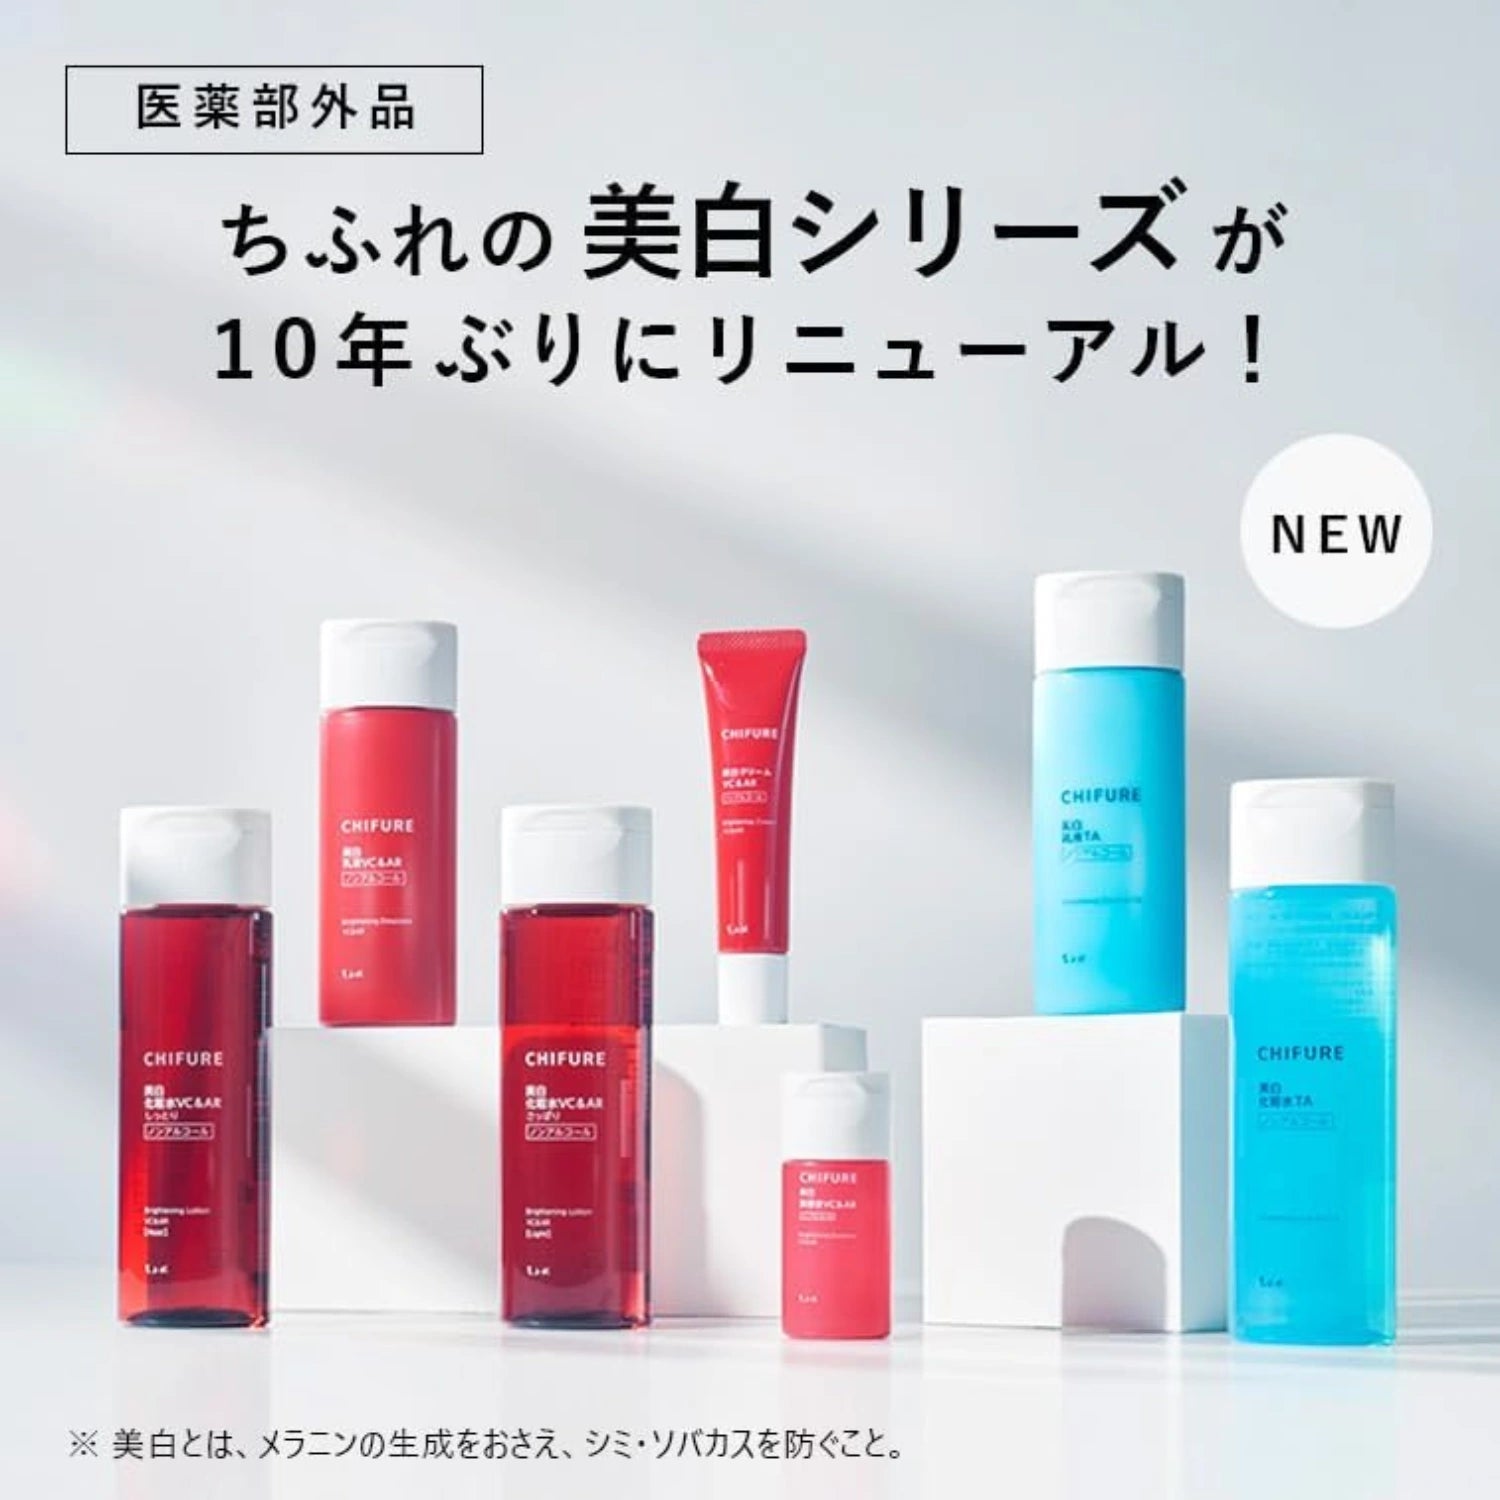 Chifure Brightening Serum Vitamin C & Arbutin 30ml - Buy Me Japan